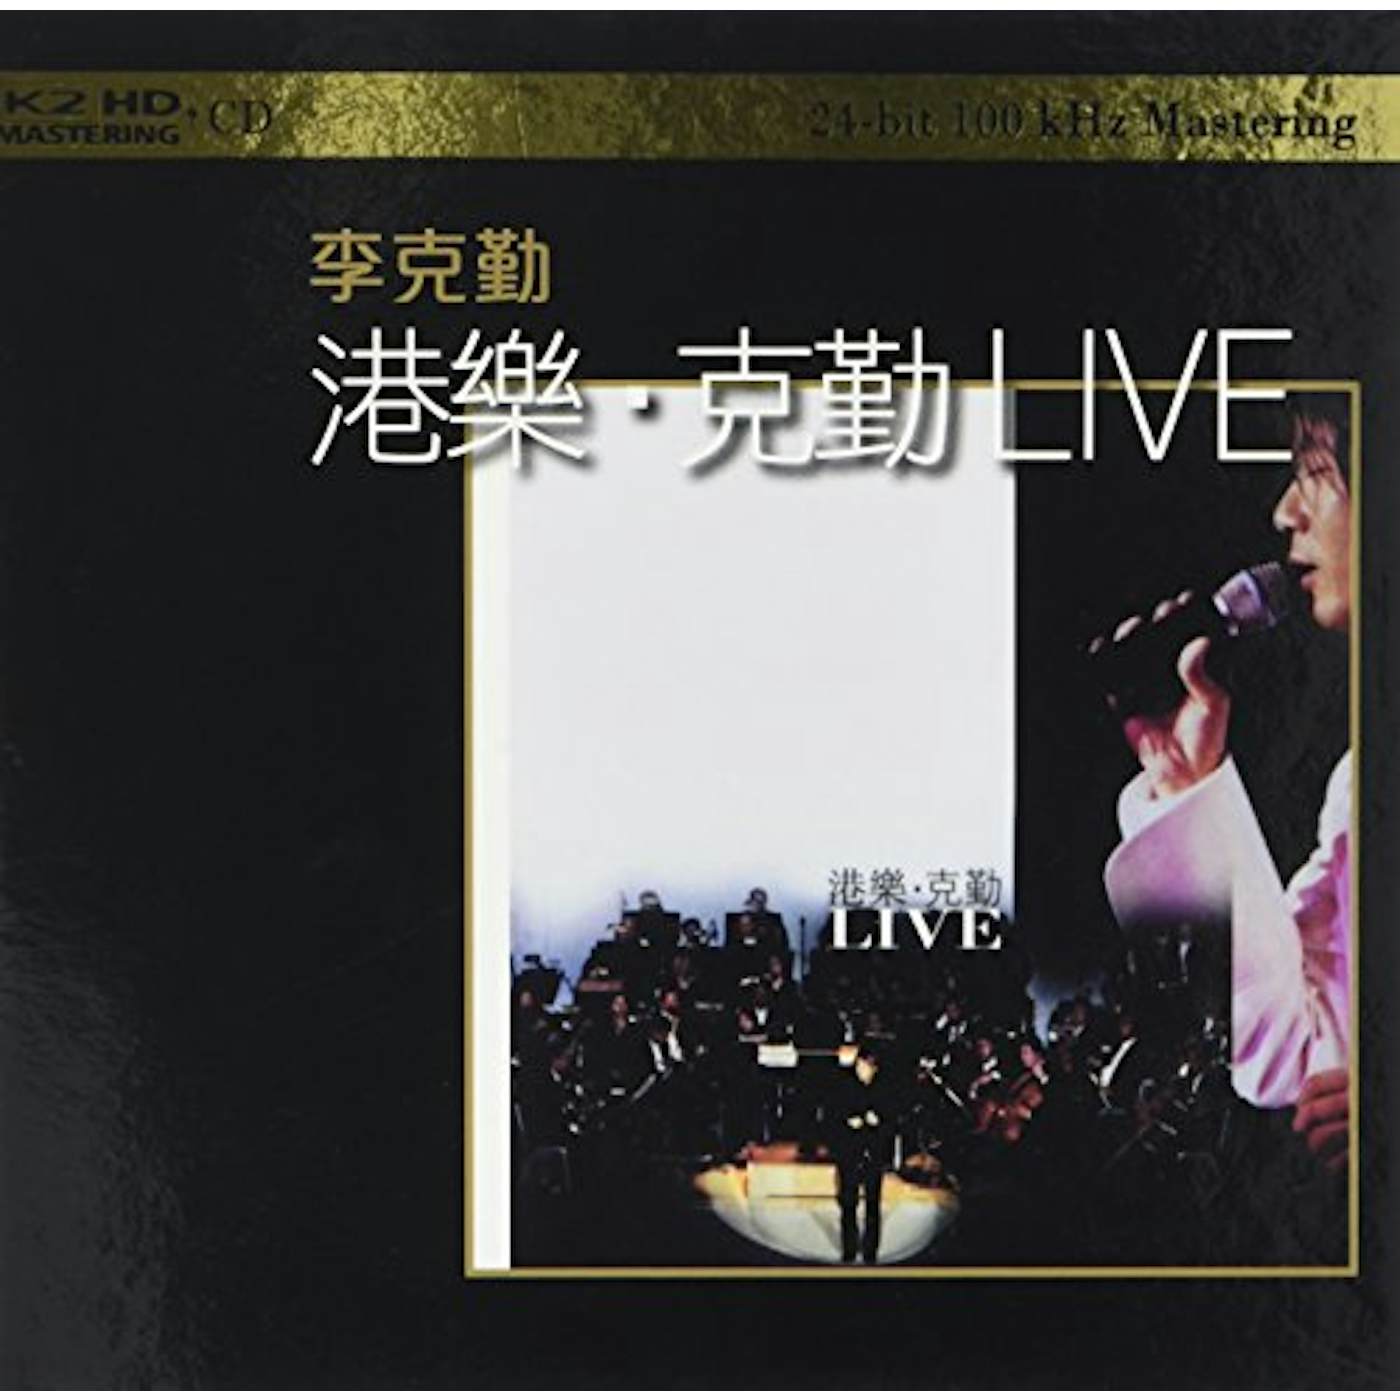 HACKEN LEE LIVE (K2HD MASTERING) CD